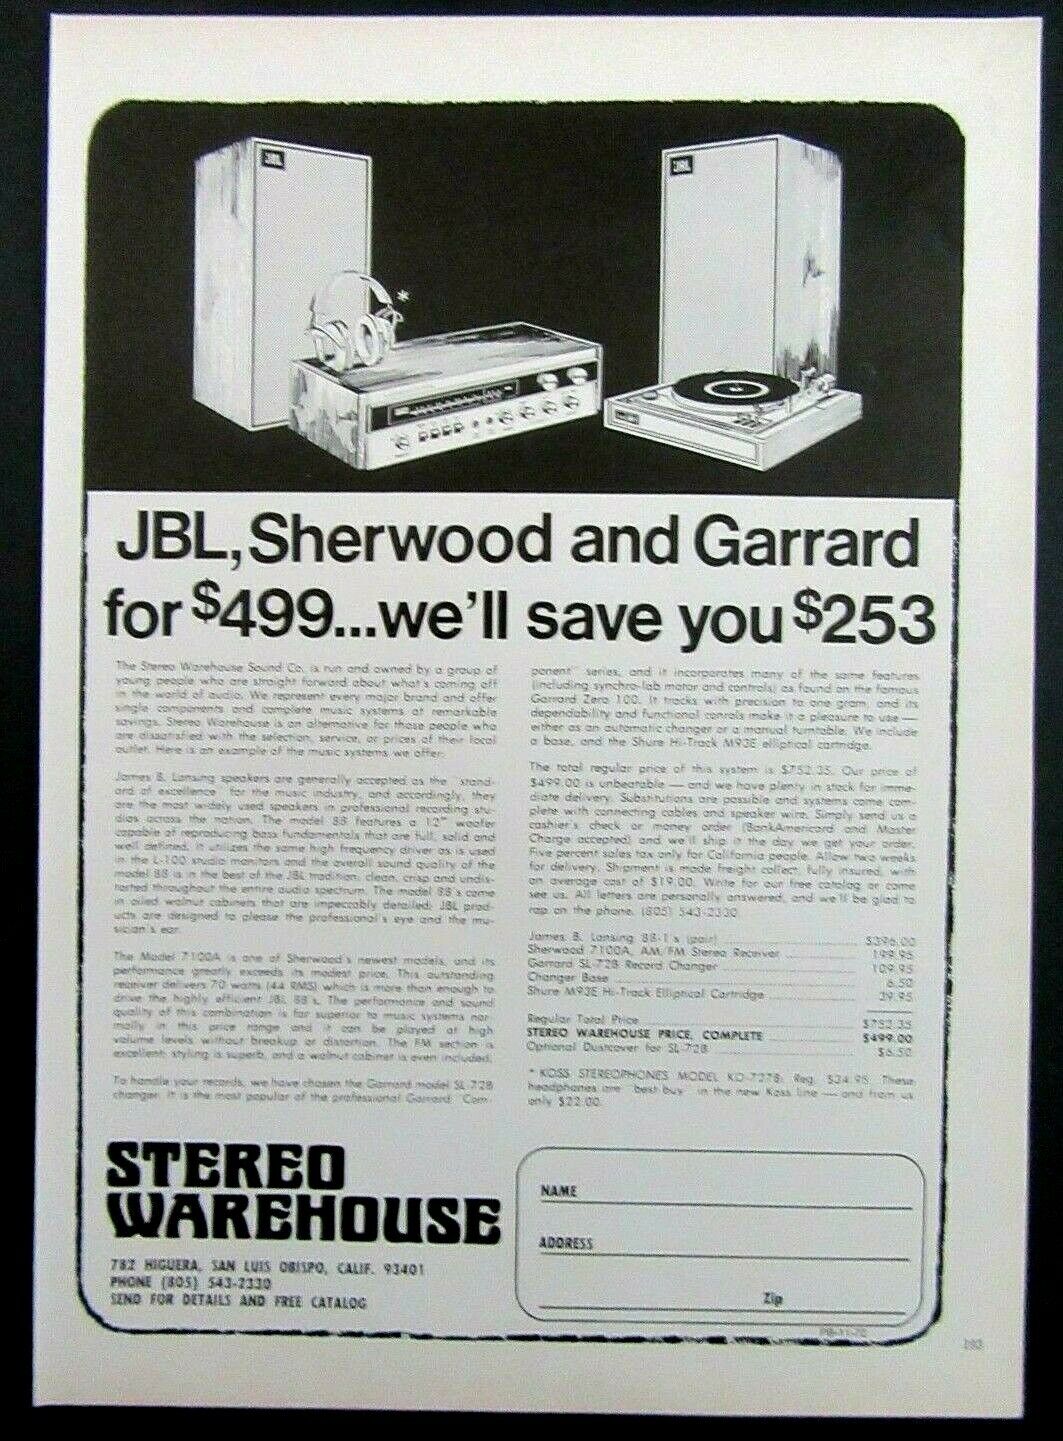 1972 STEREO WAREHOUSE -JBL, Sherwood & Garrand Offer- Magazine Ad